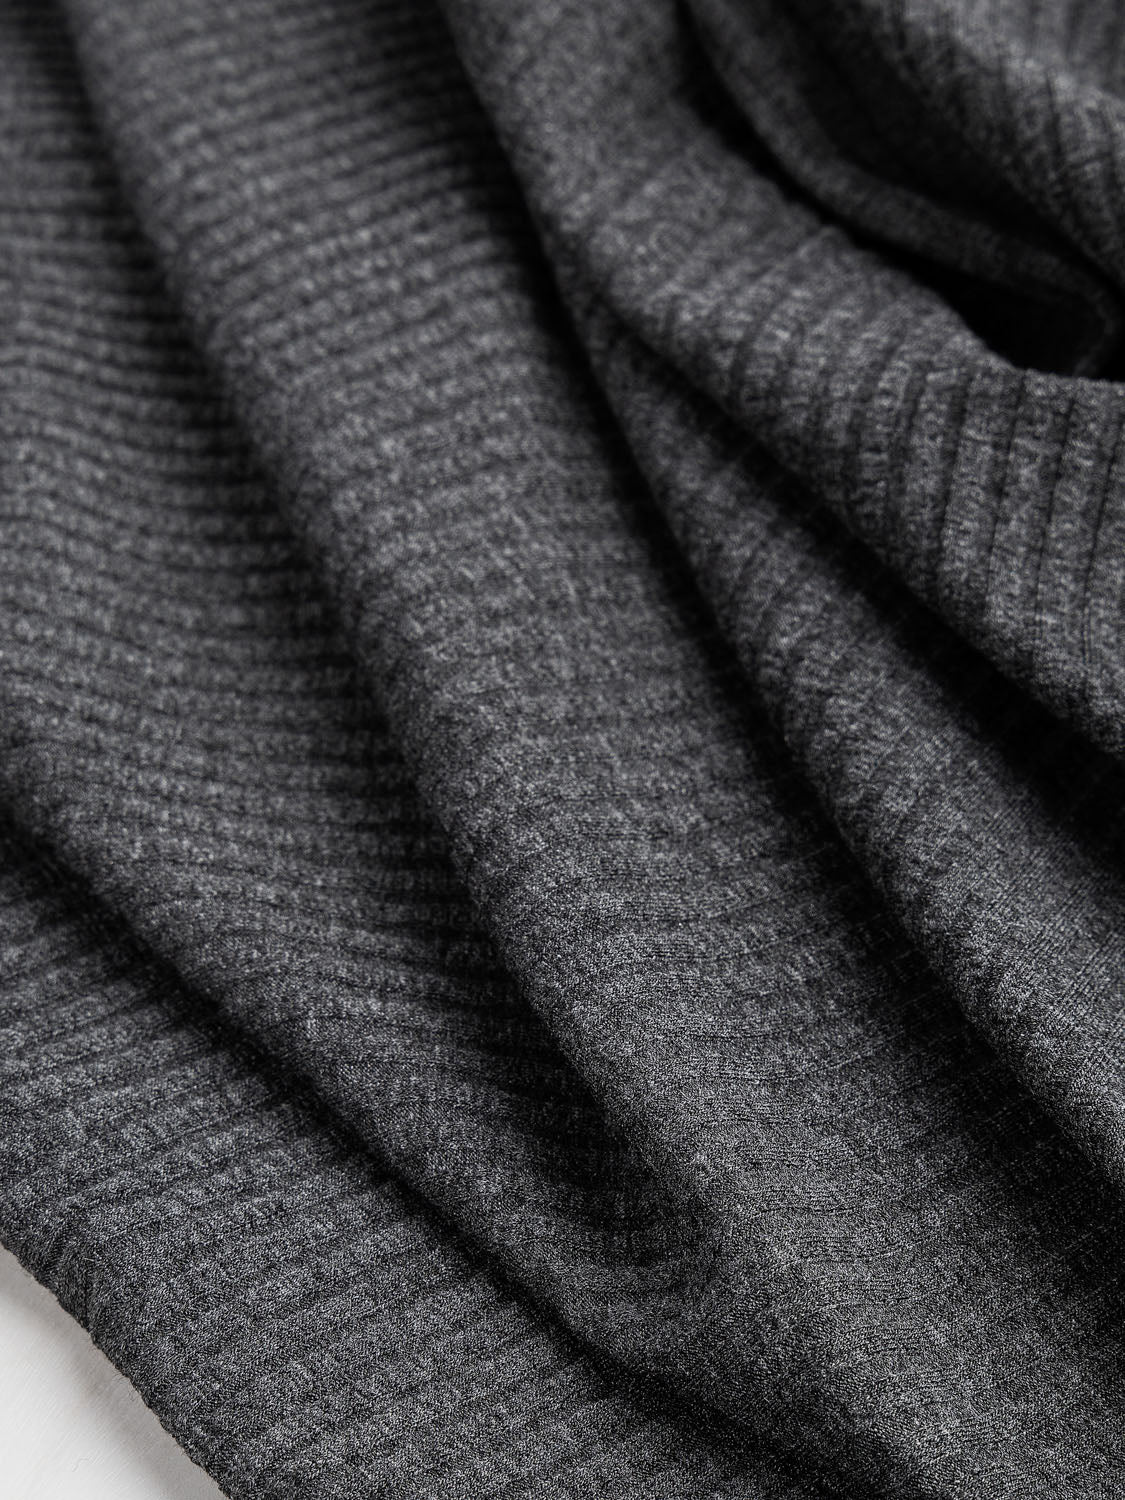 Viscose Fabric + Rayon Fabrics, Online Fabric Store